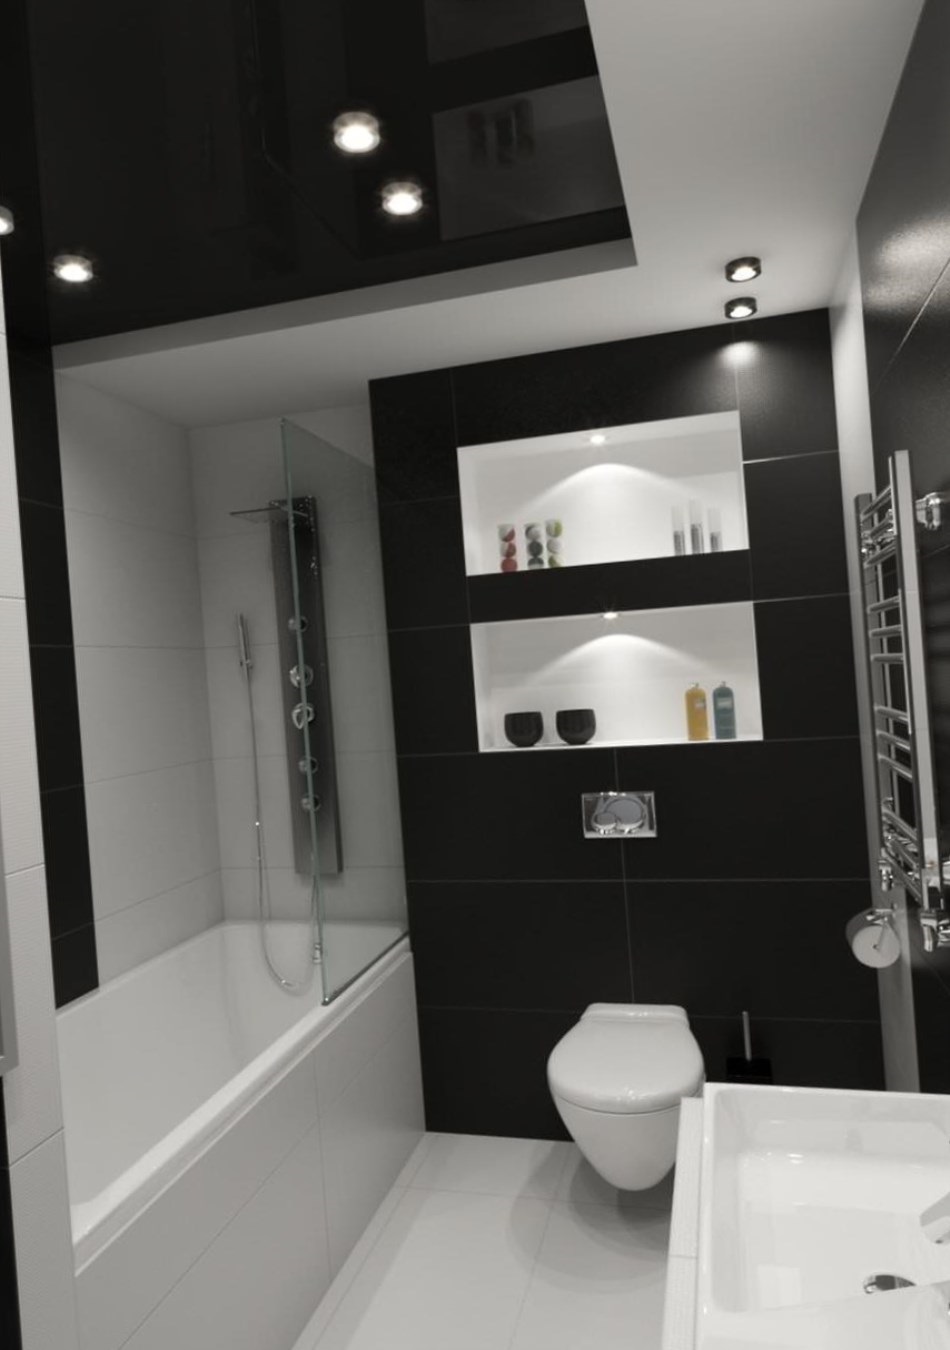 Un exemple de design de salle de bain clair de 5 m²